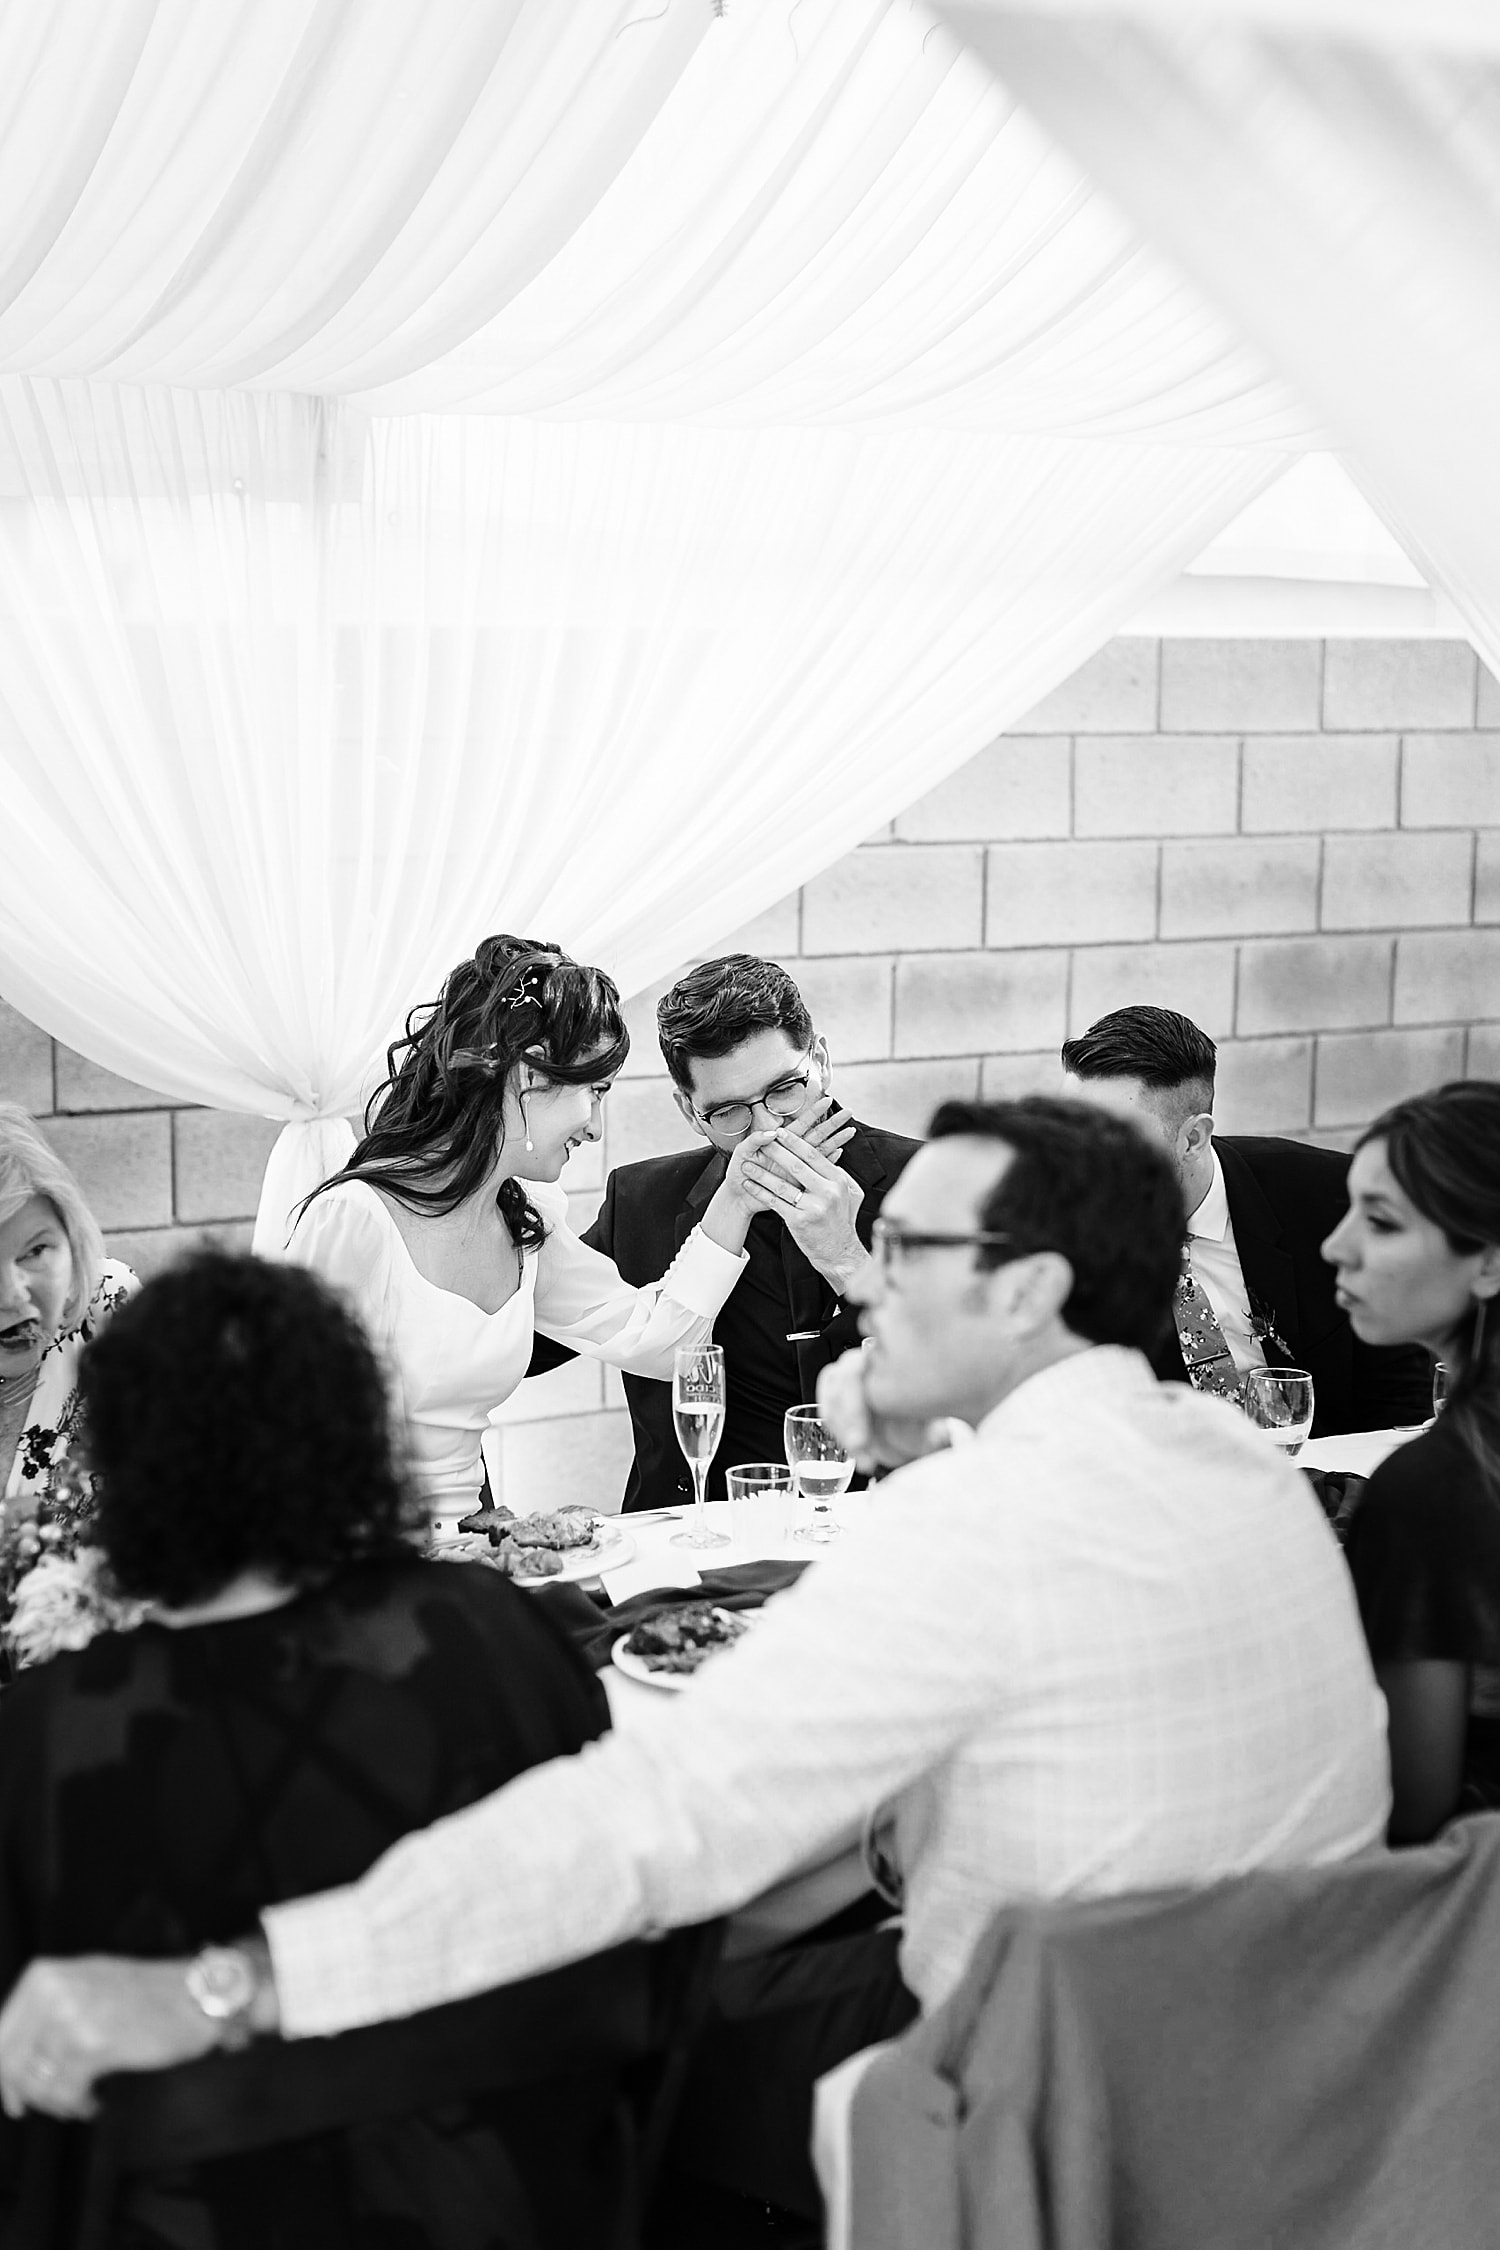 Groom kissing bride's hand at reception